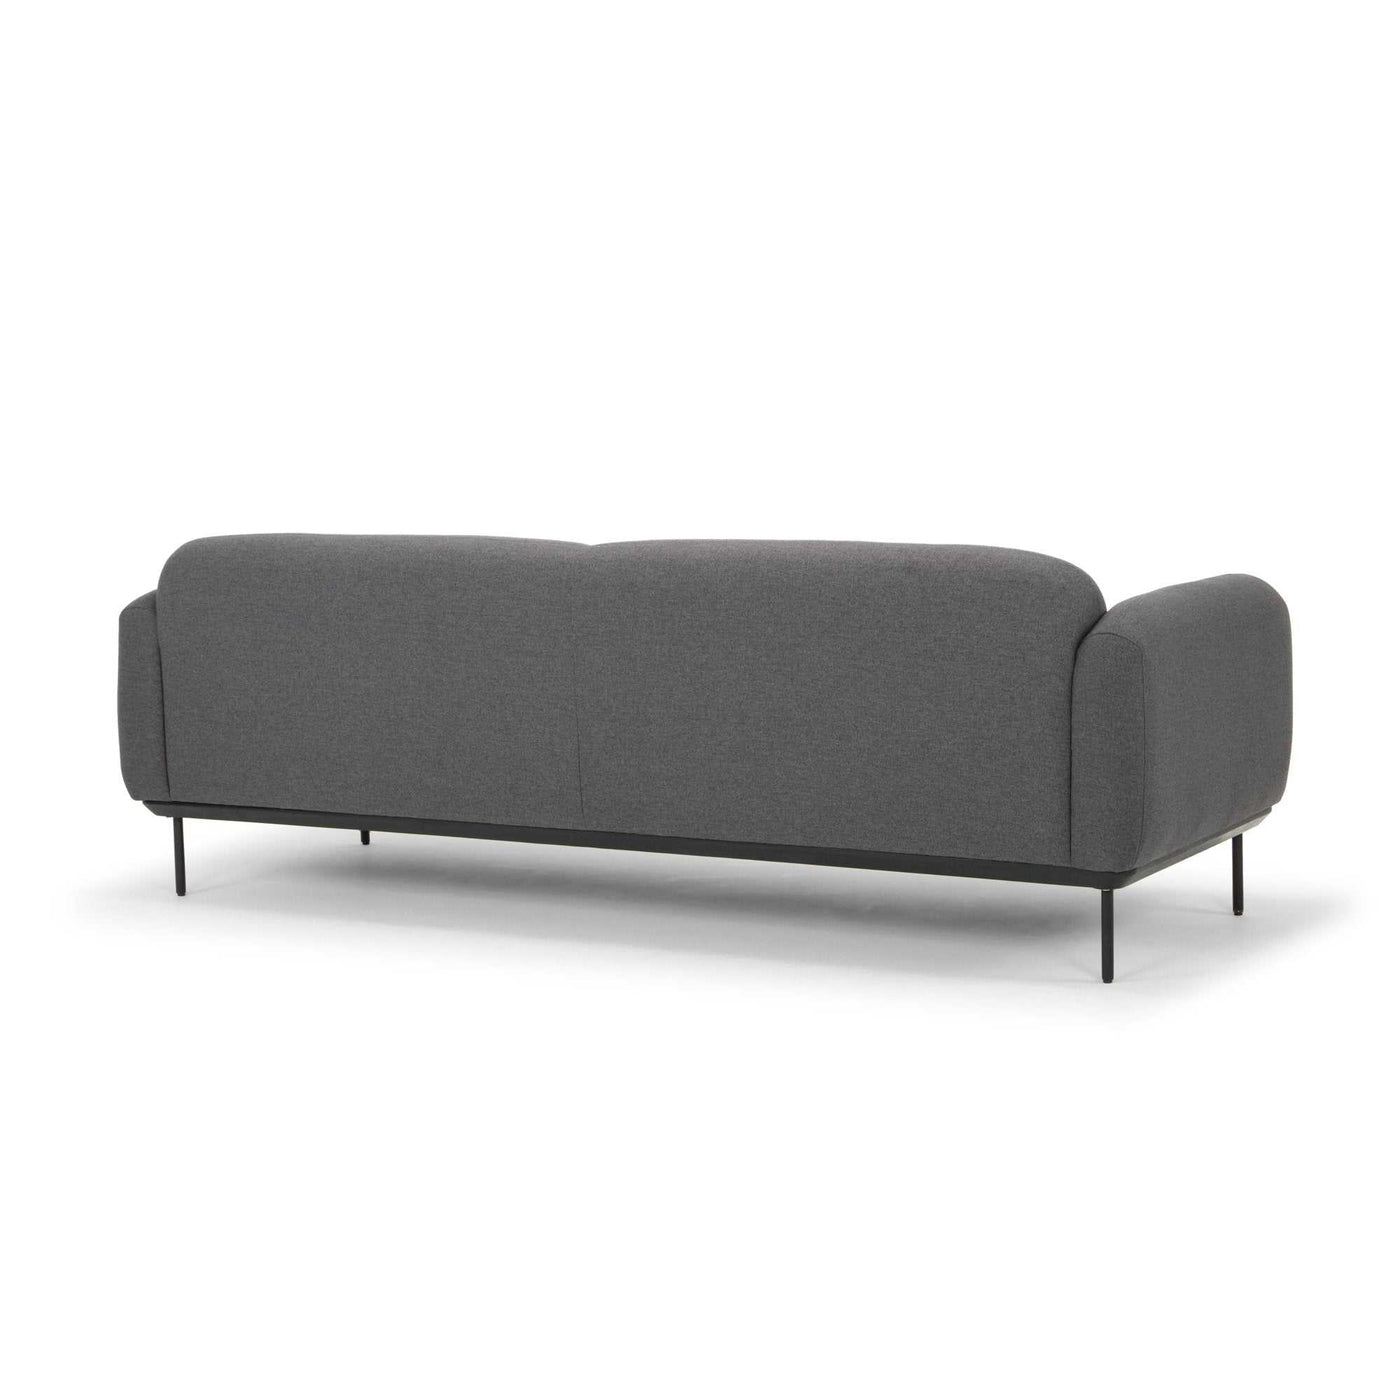 3 Seater Sofa - Antrazite with Black Steel Legs